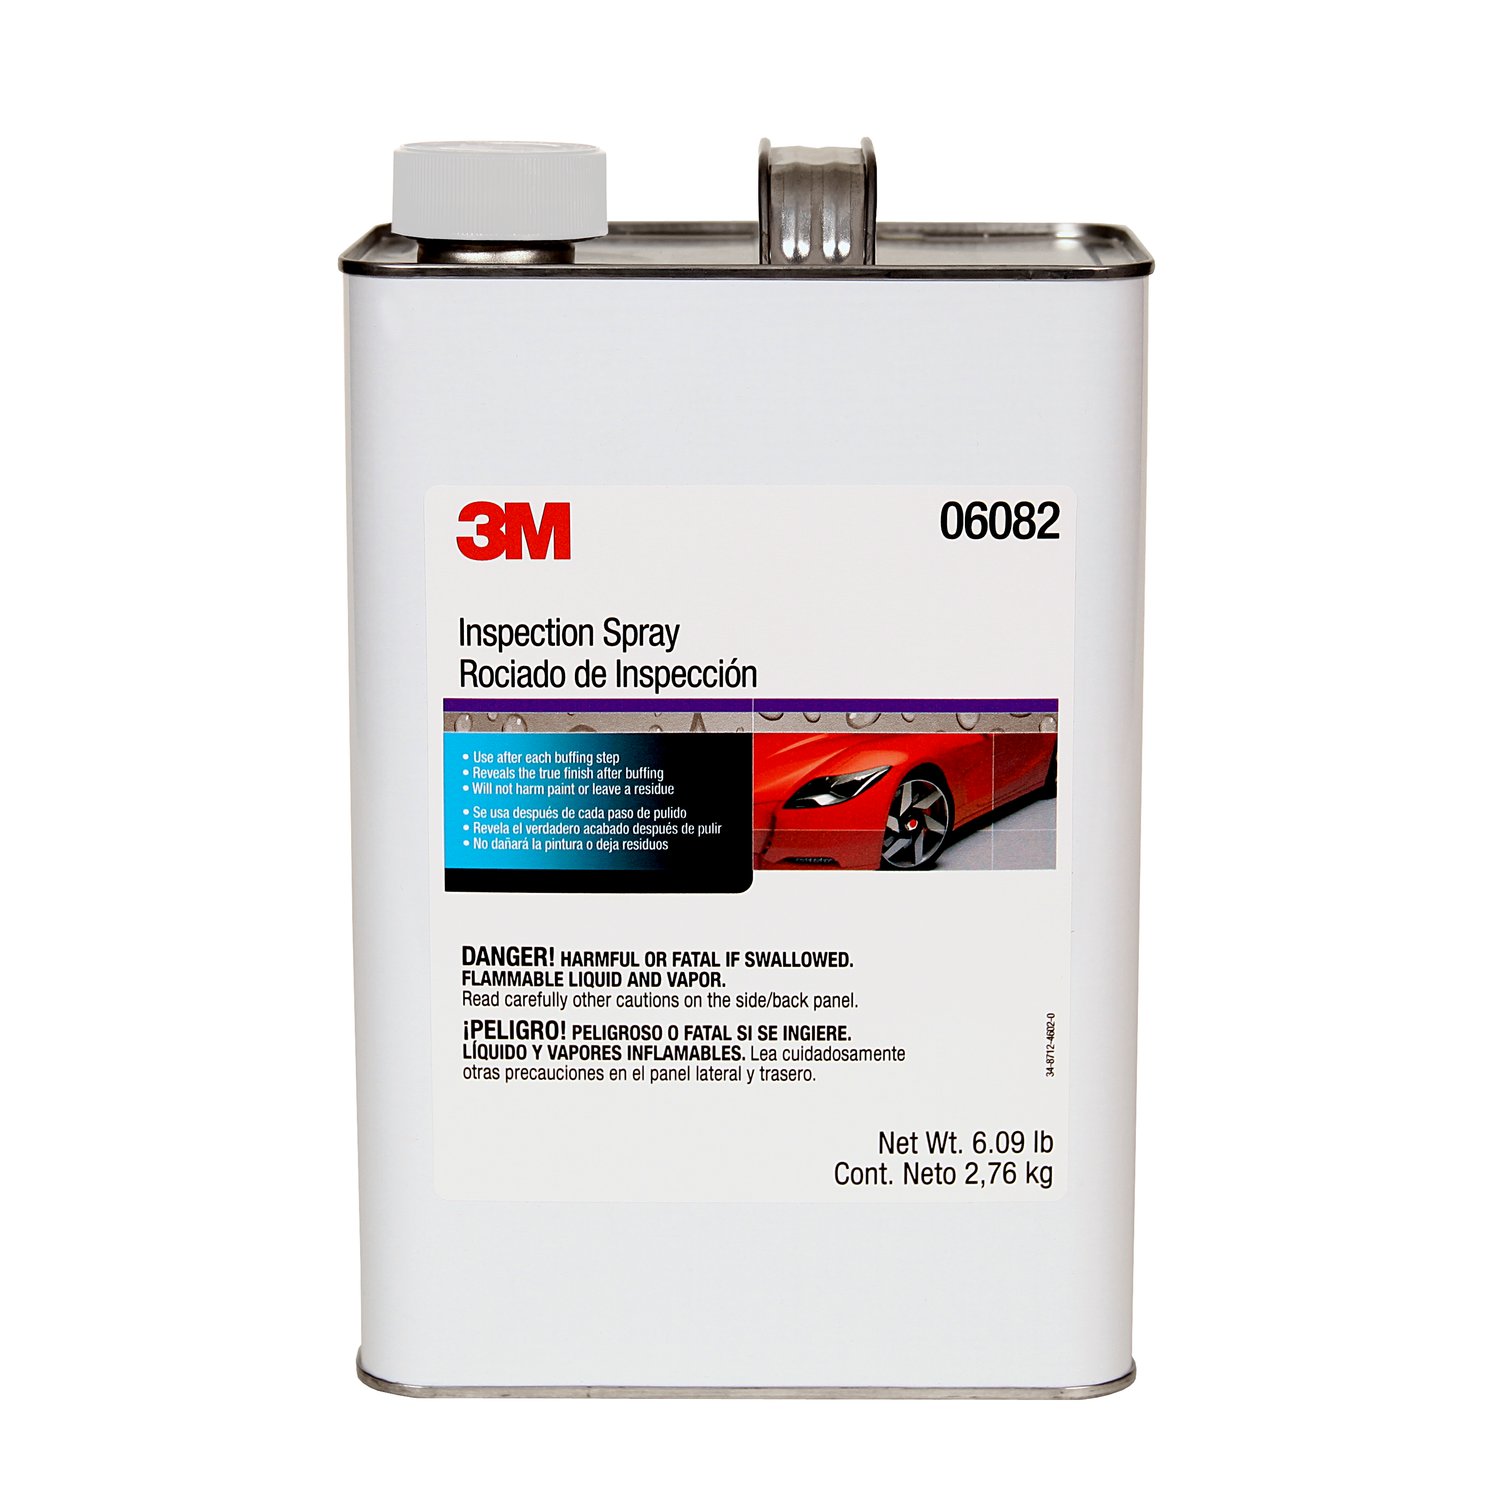 7100050234 - 3M Inspection Spray, 06082, 1 gal (6.09 lb), 4 per case